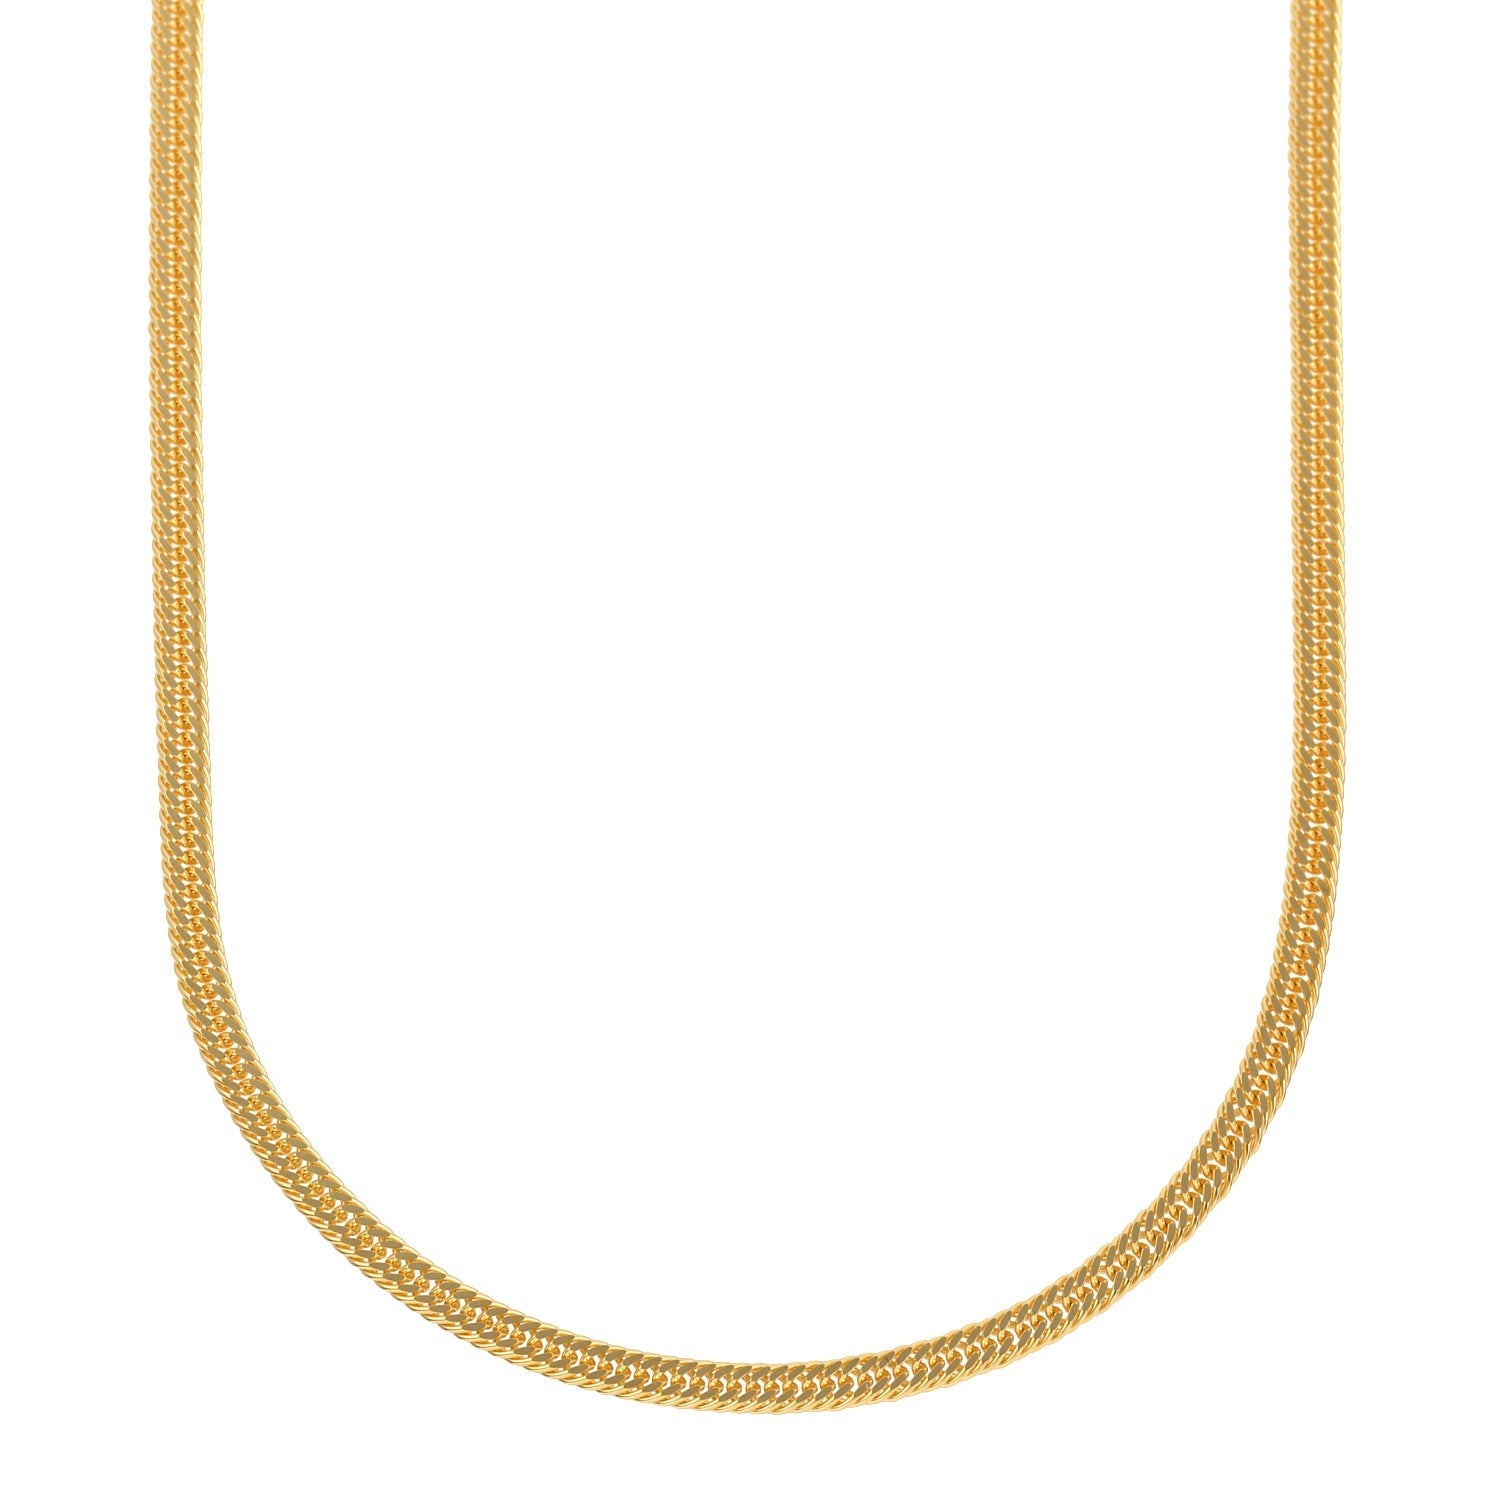 50cmの18金ネックレス - 喜平ジュエリーの専門店 FAIRY CULLET